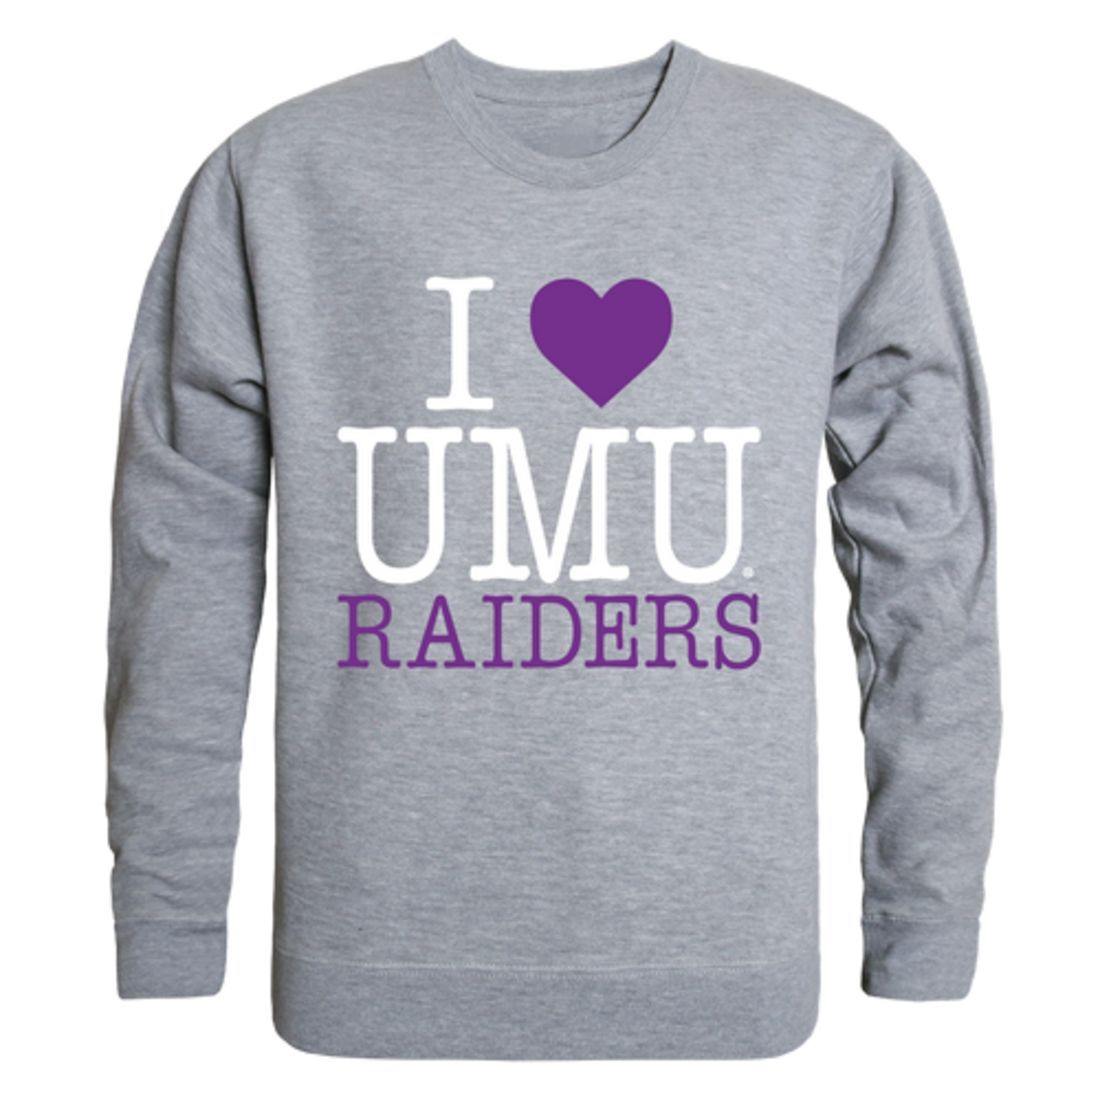 I Love University of Mount Union Raiders Crewneck Pullover Sweatshirt Sweater-Campus-Wardrobe